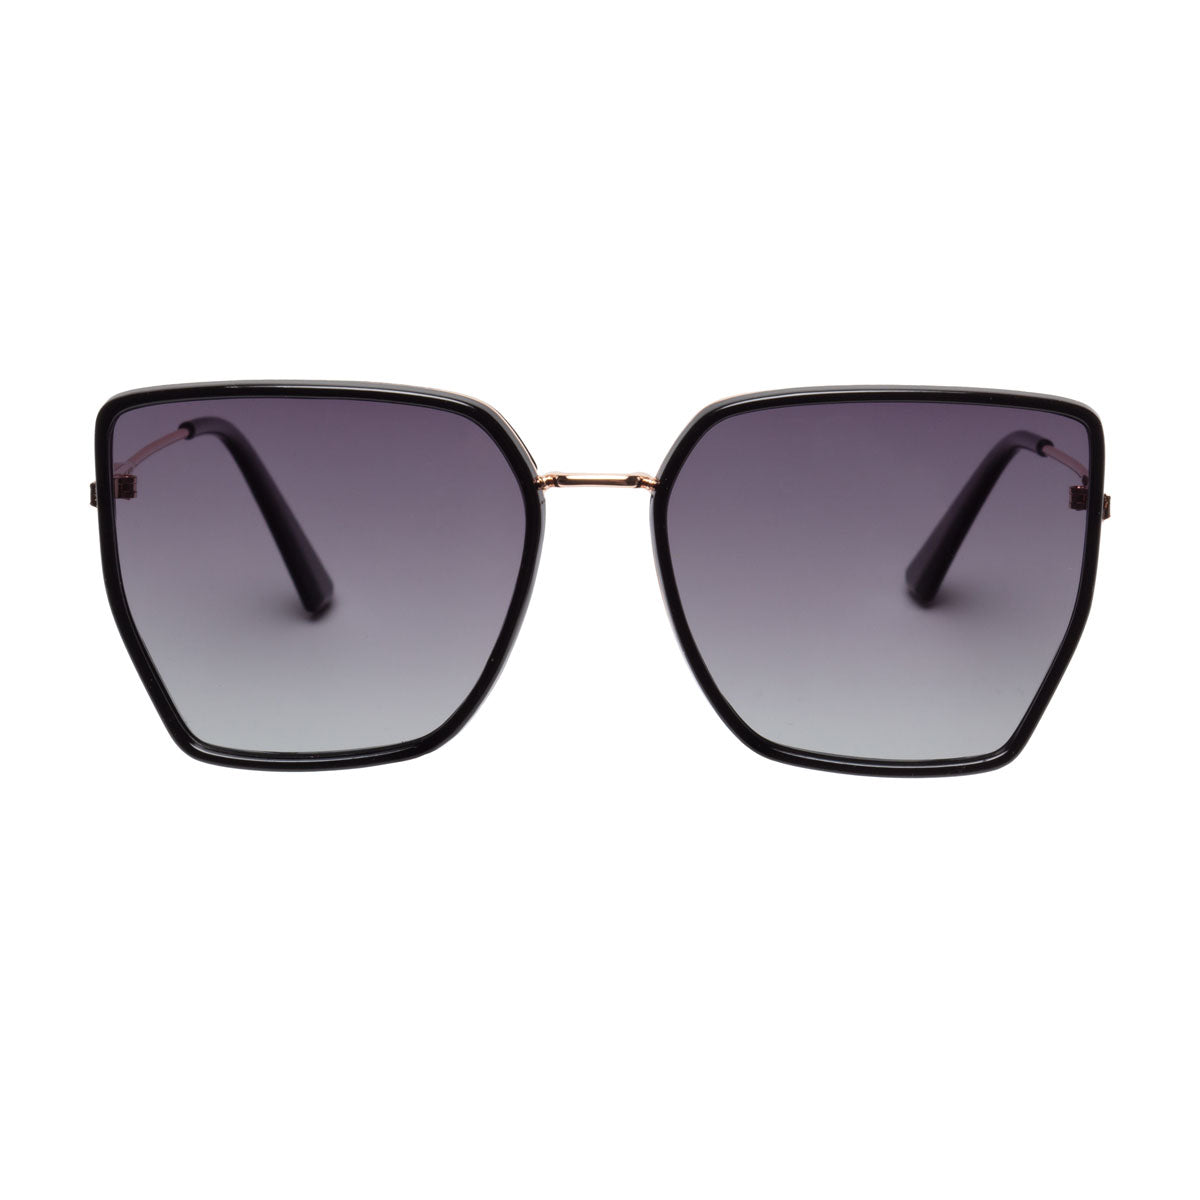 Sunglasses - EBS7017 Martinique